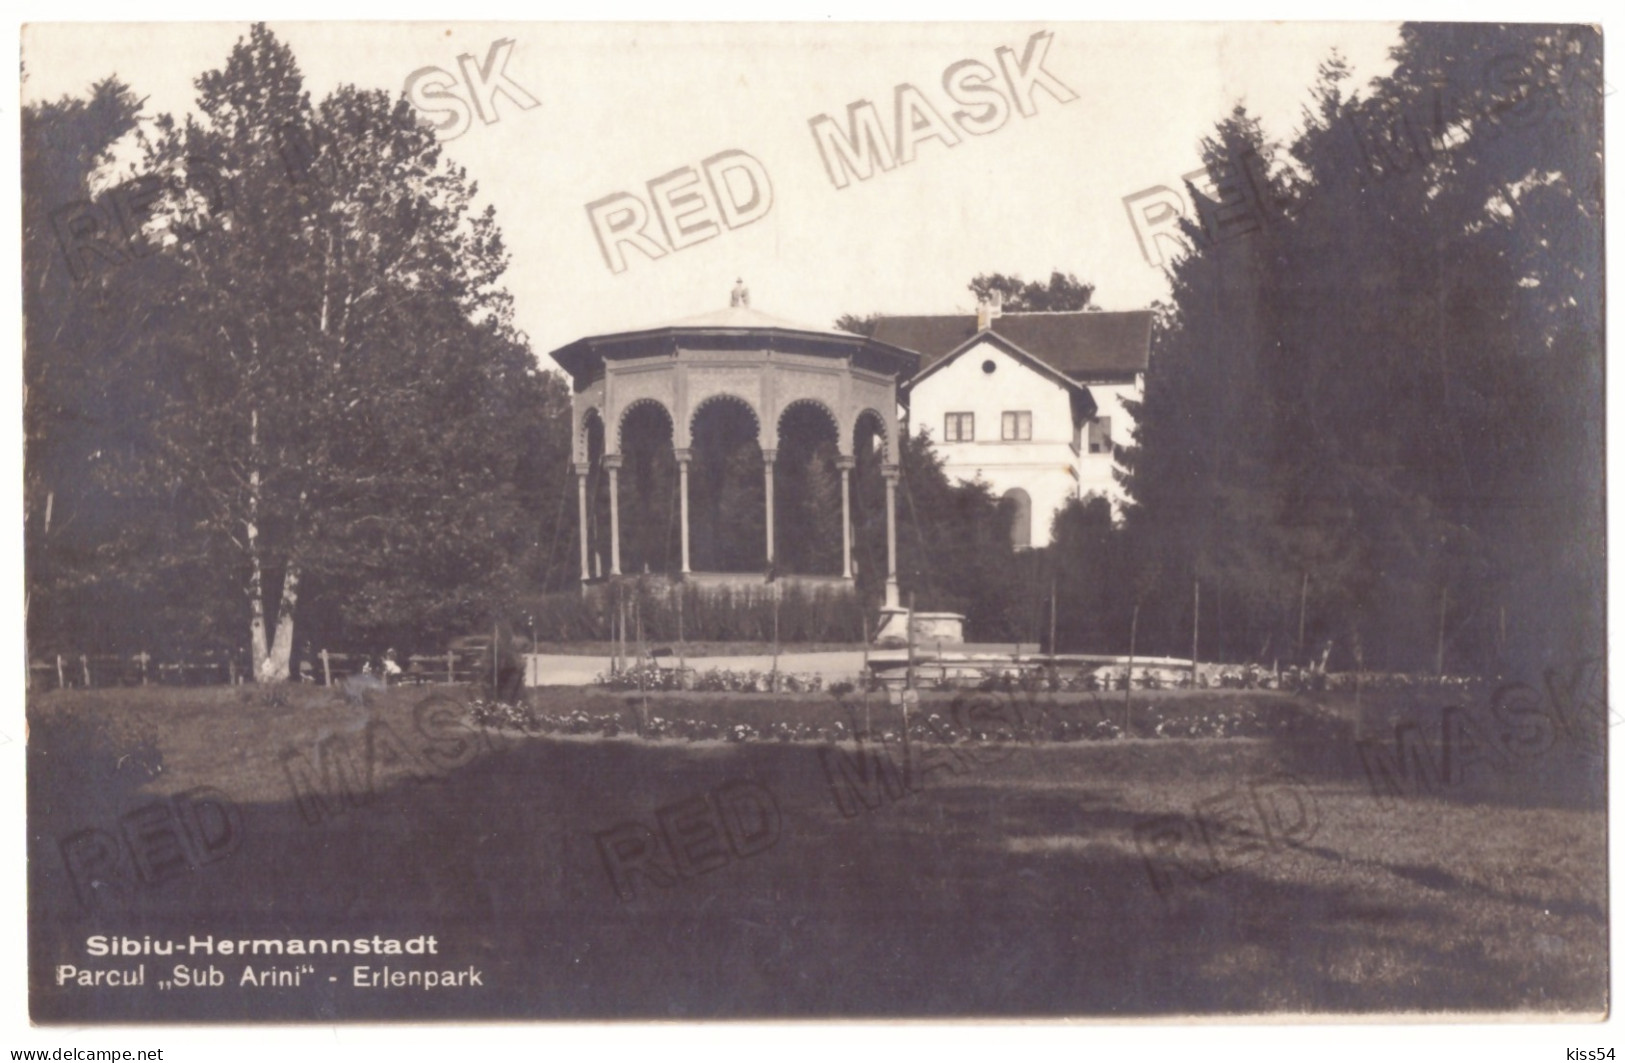 RO 79 - 21083 SIBIU, Park, Romania - Old Postcard, Real Photo - Used - 1929 - Rumänien